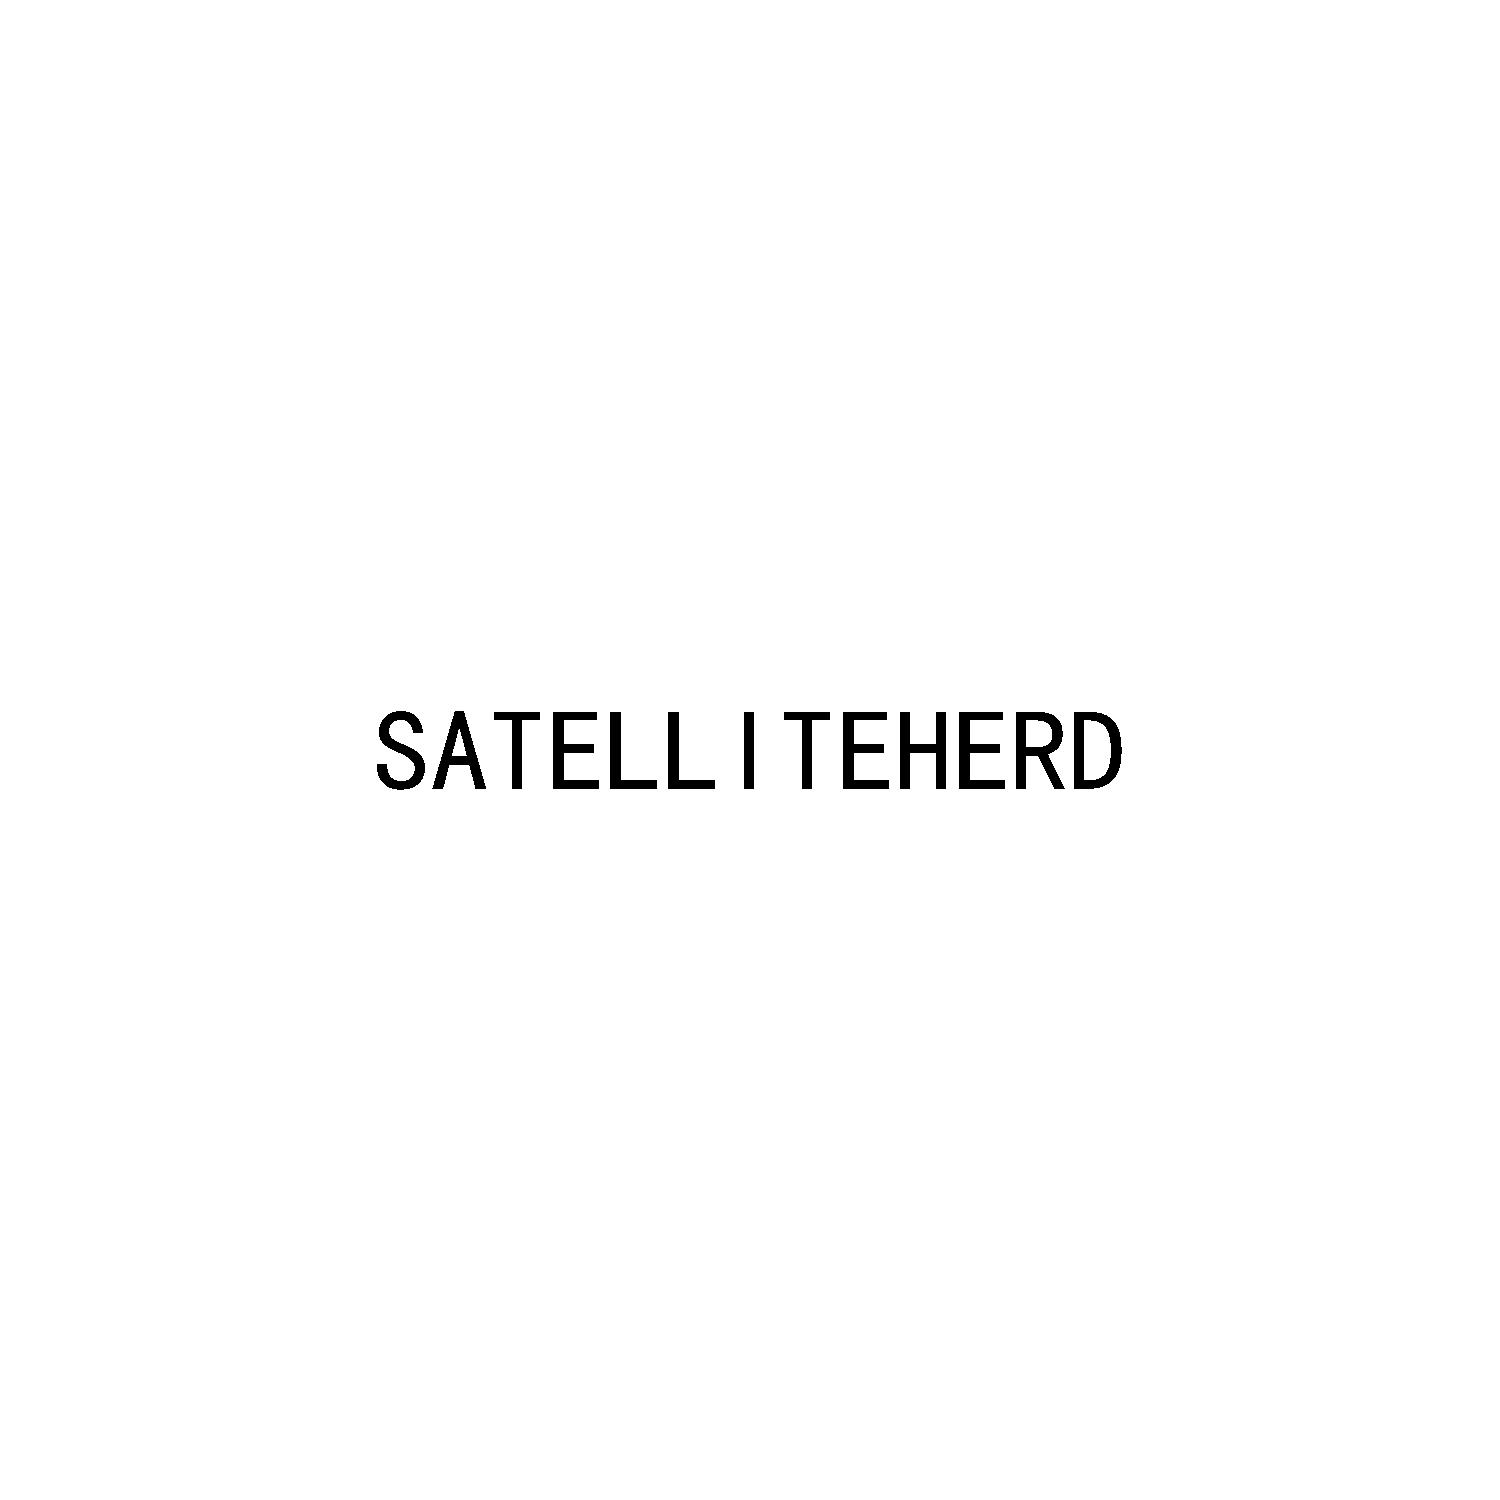 SATELLITEHERD